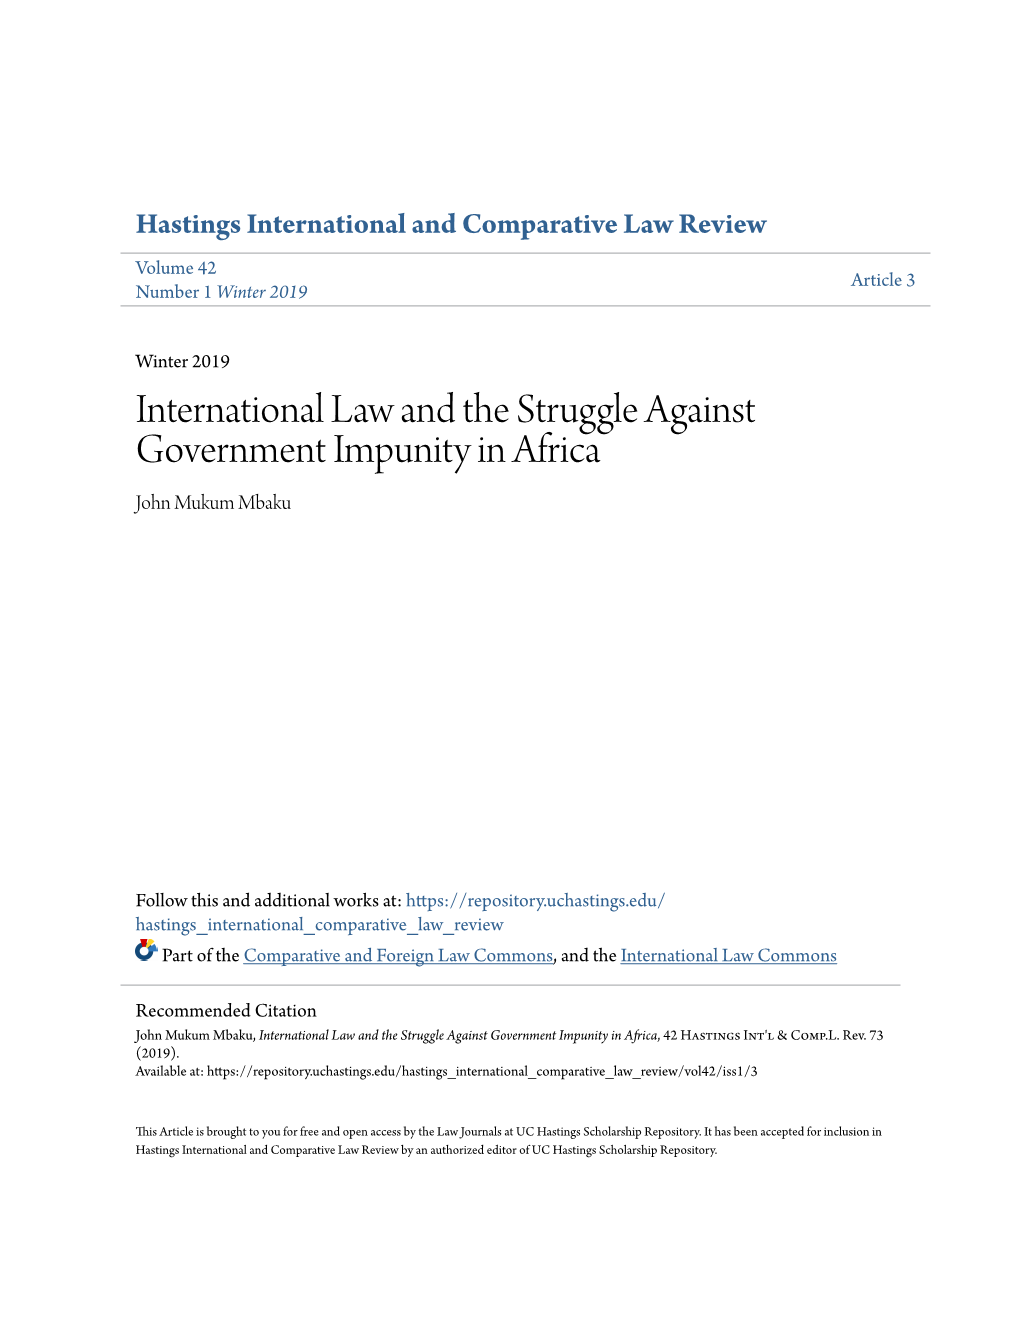 International Law and the Struggle Against Government Impunity in Africa John Mukum Mbaku